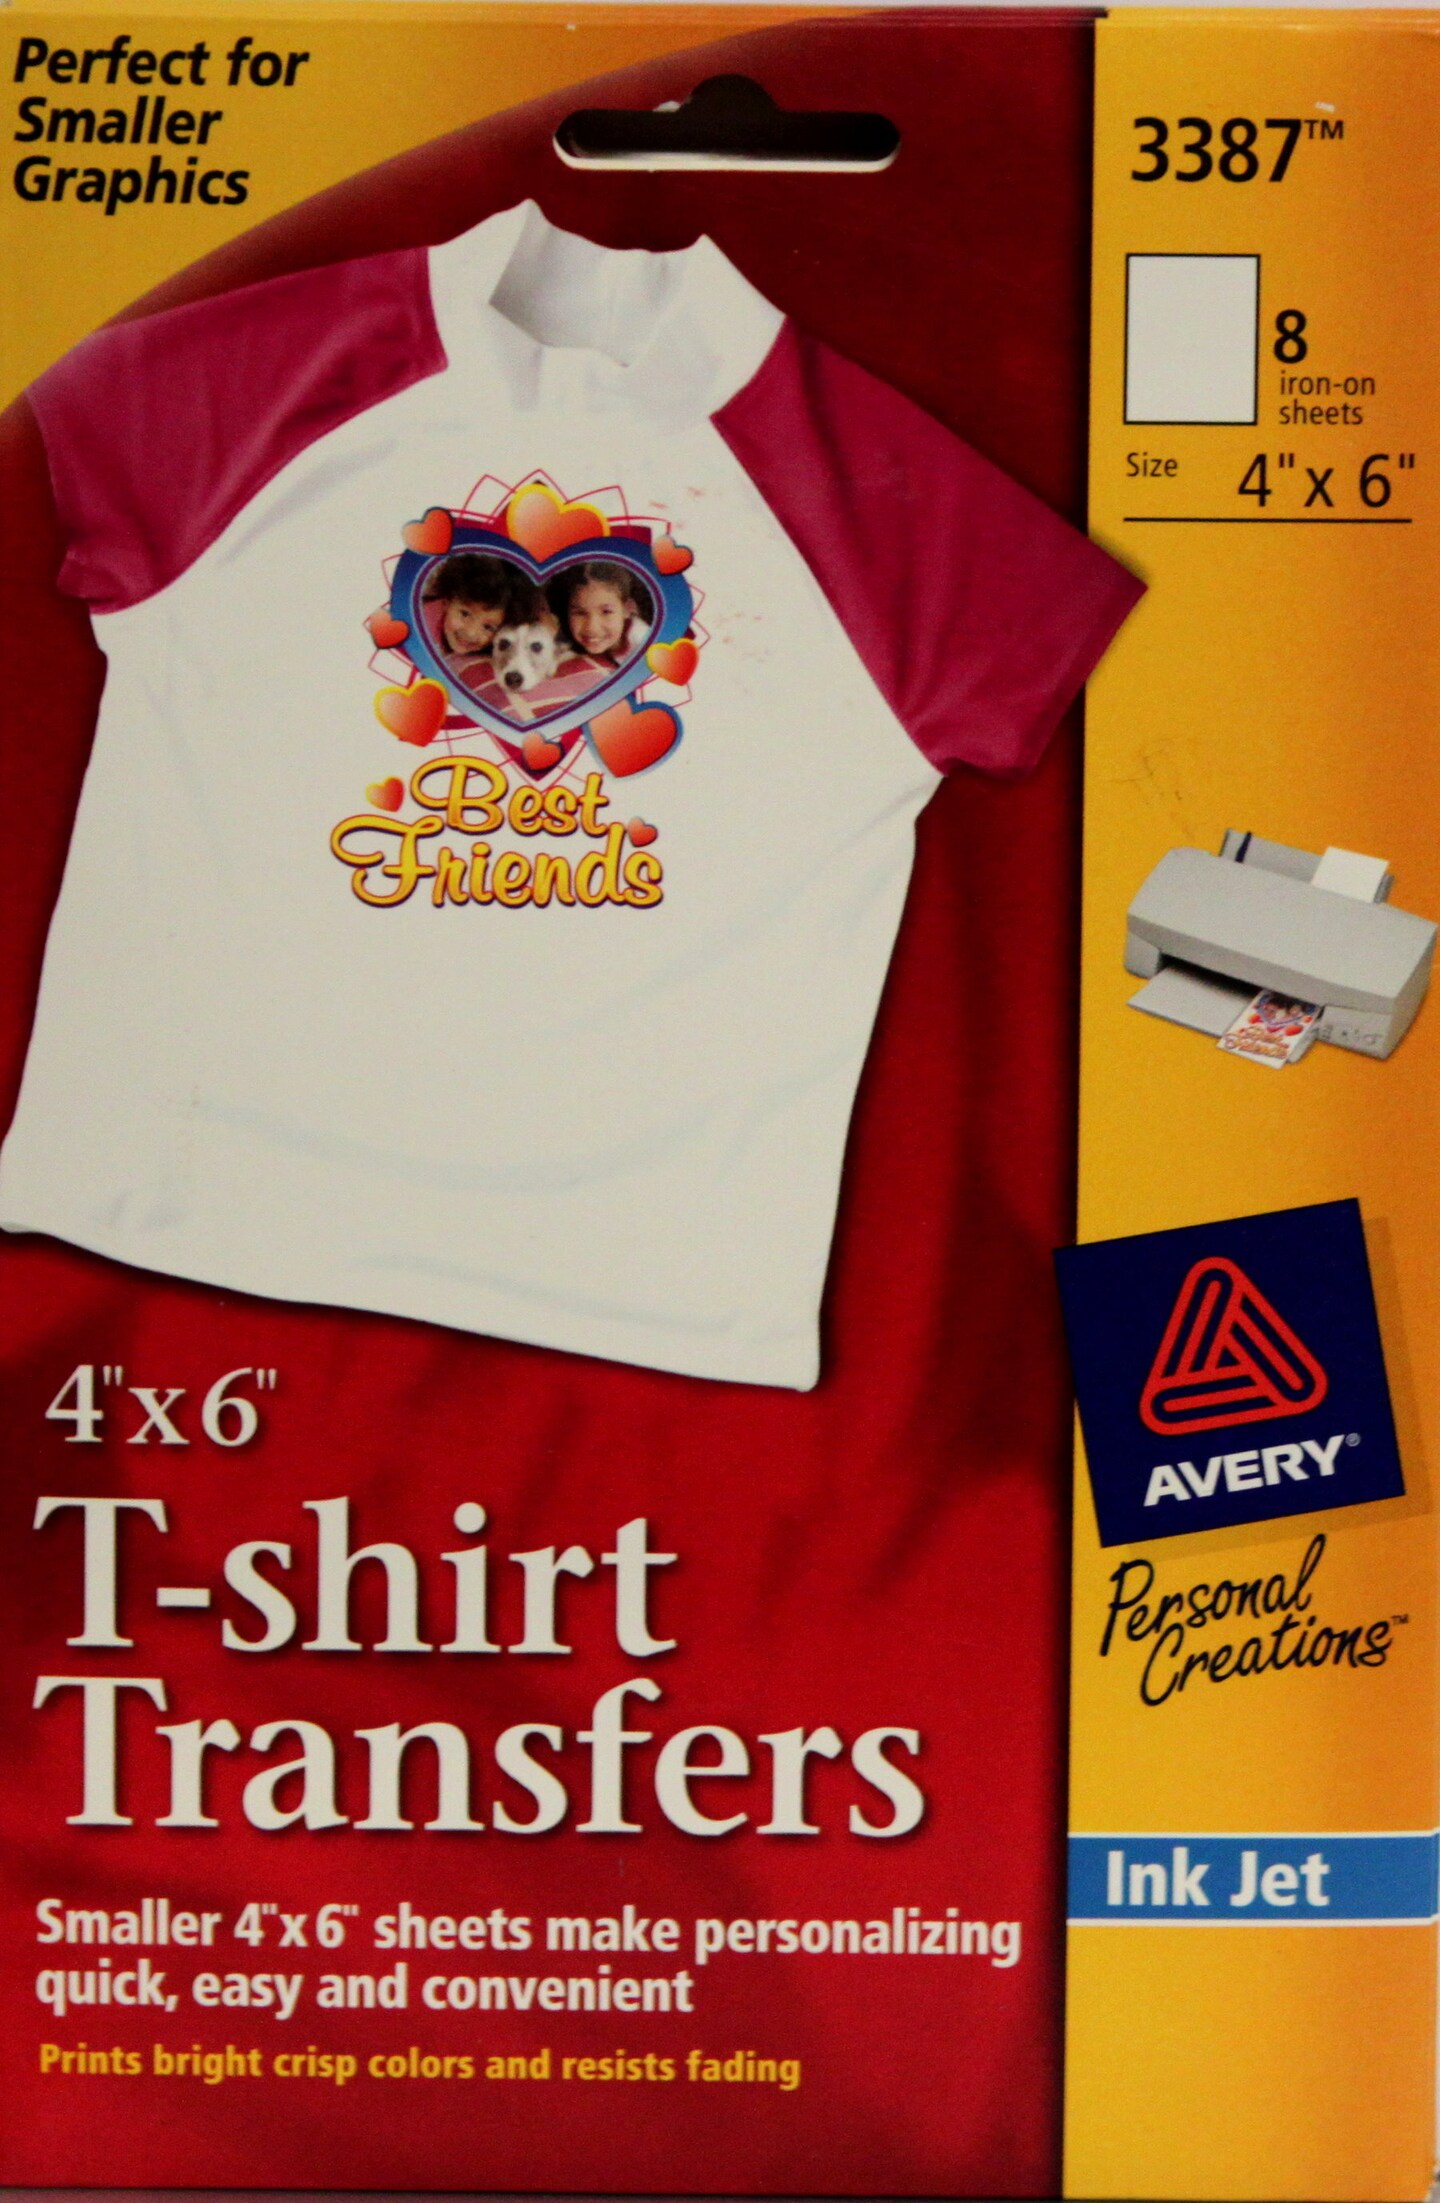 Avery Ink Jet 4 x 6 T-shirt Transfers